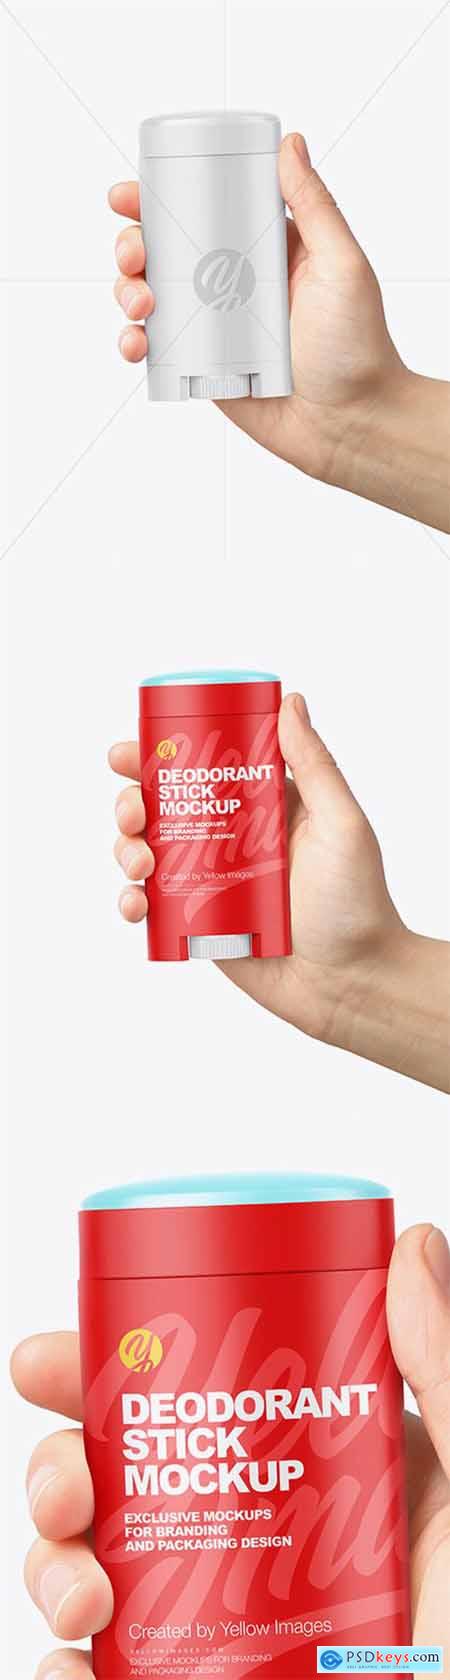 Opened Plastic Deodorant Stick in Hand Mockup 60501